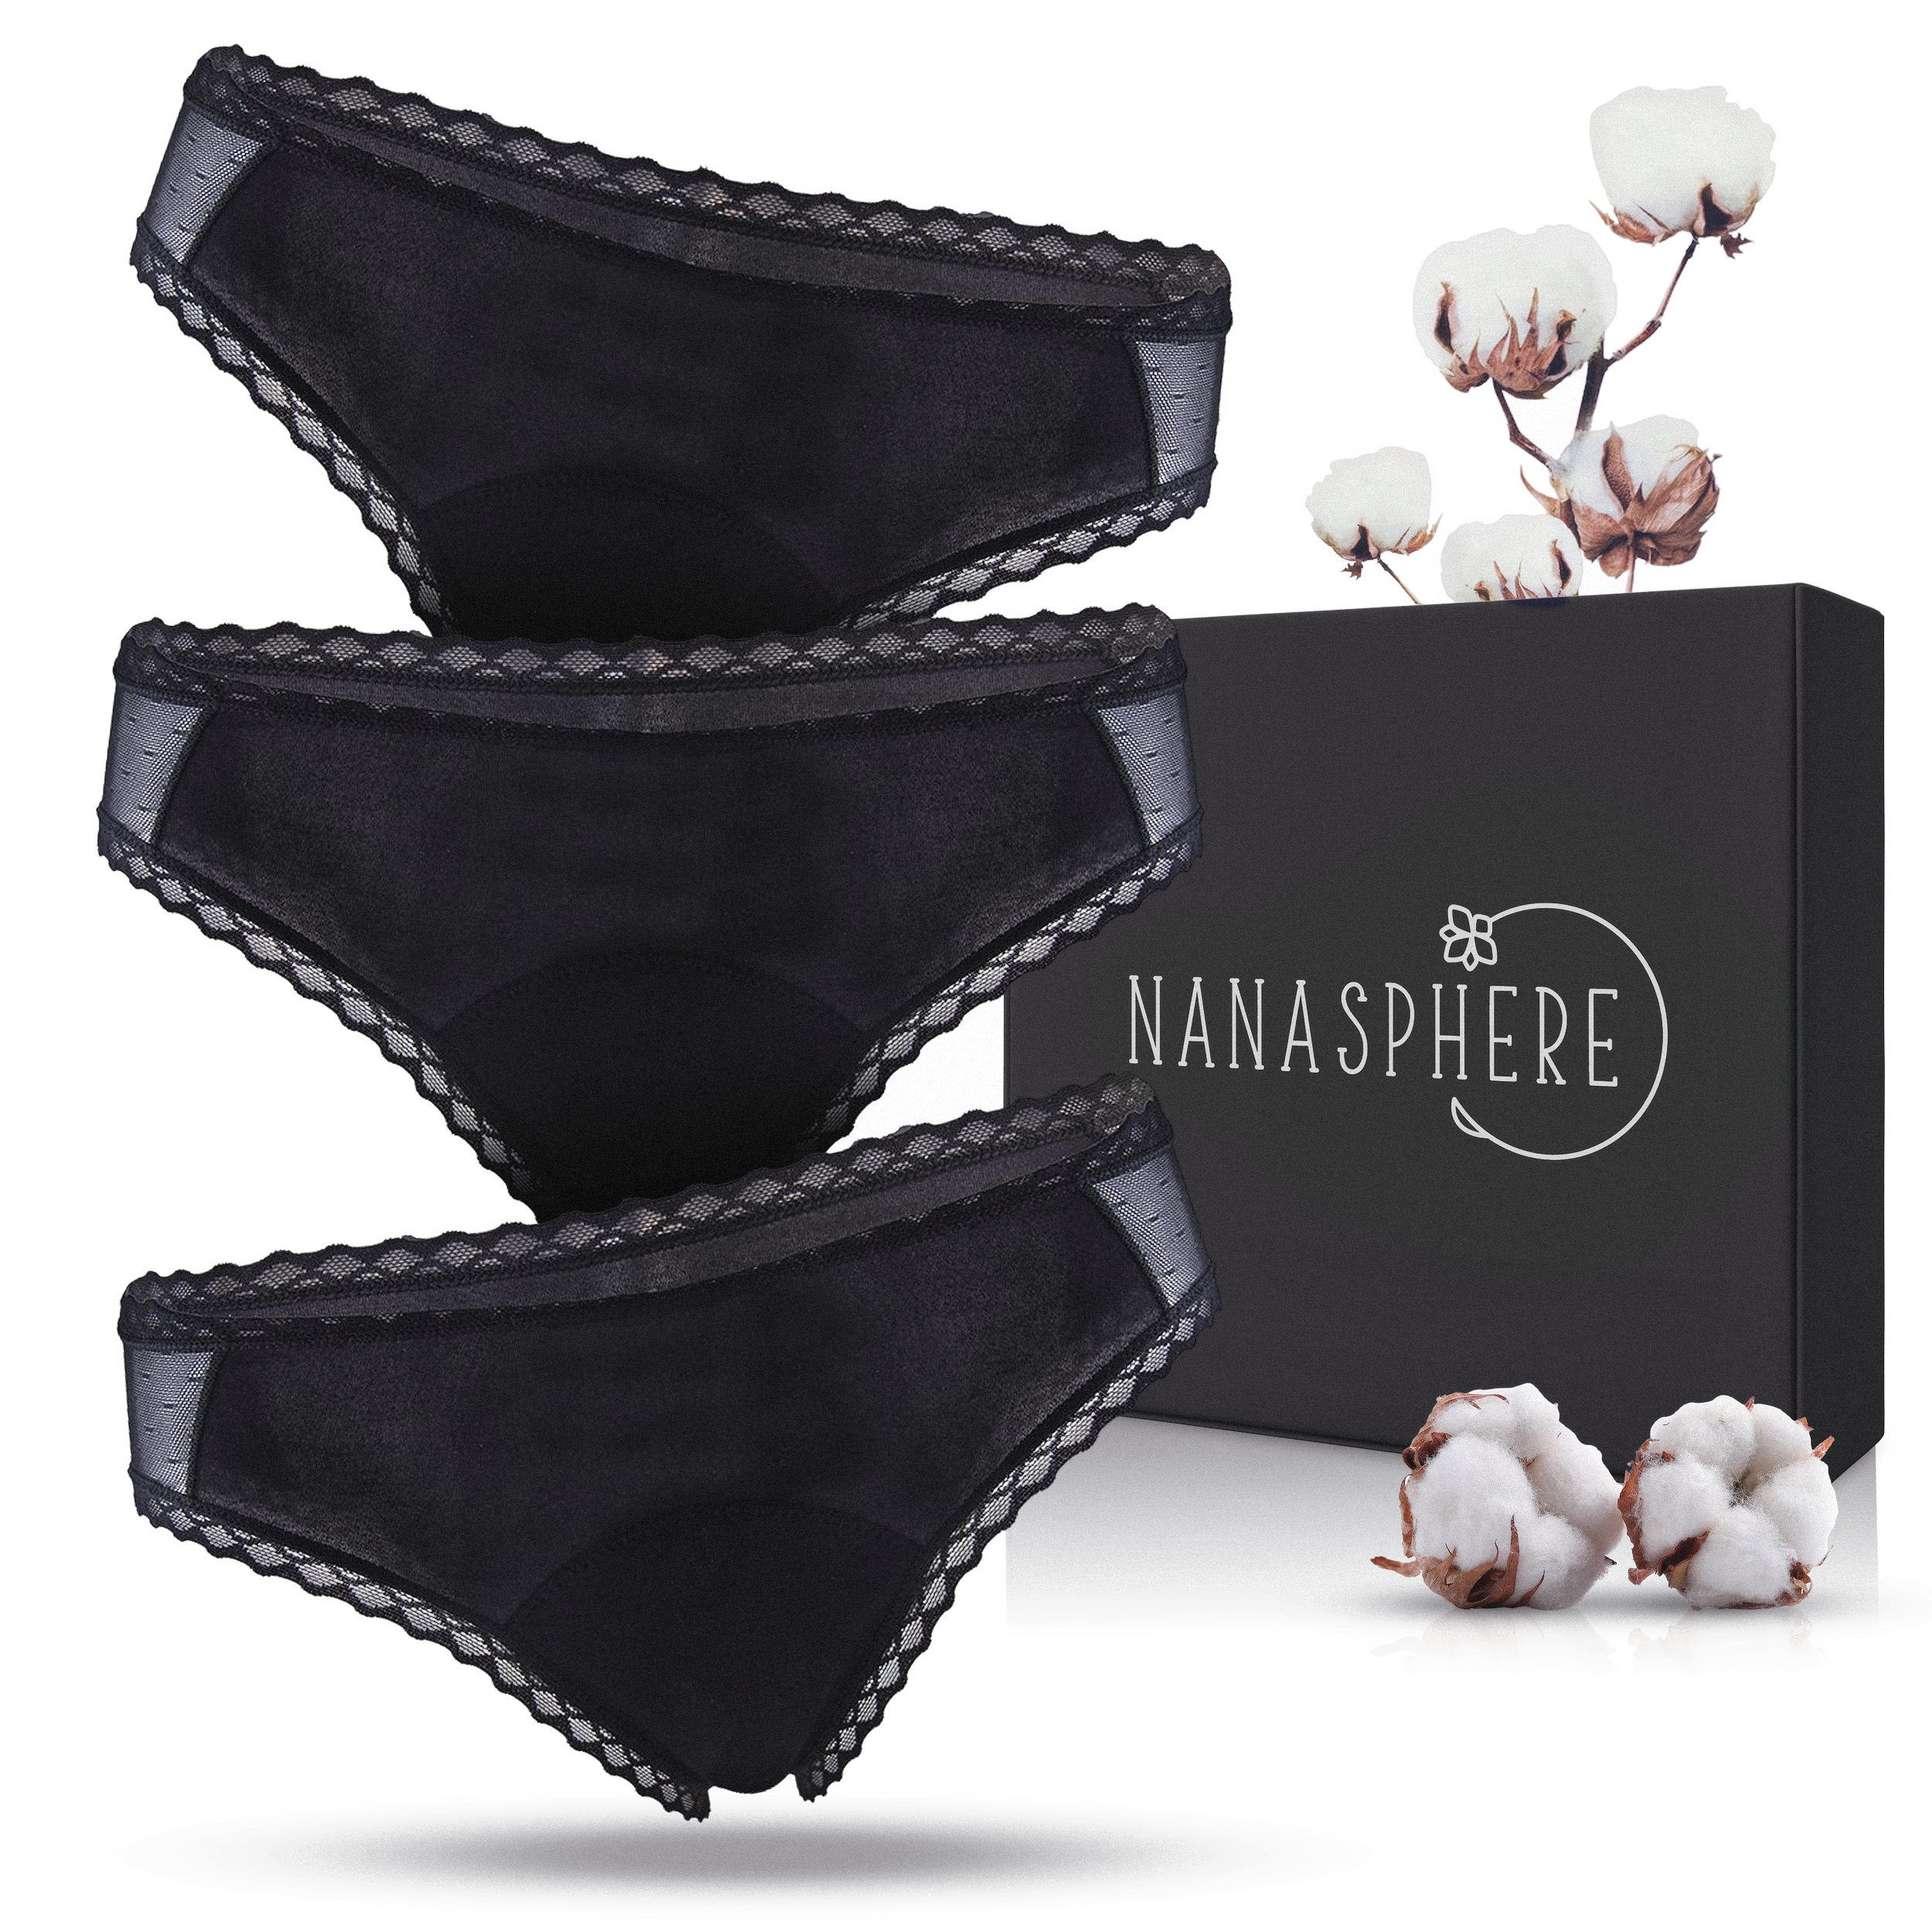 Lot de 3 Culottes Menstruelles Coton Bio Flux Abondant Modèle Lila -  NANASPHERE - Vos culottes menstruelles en coton bio